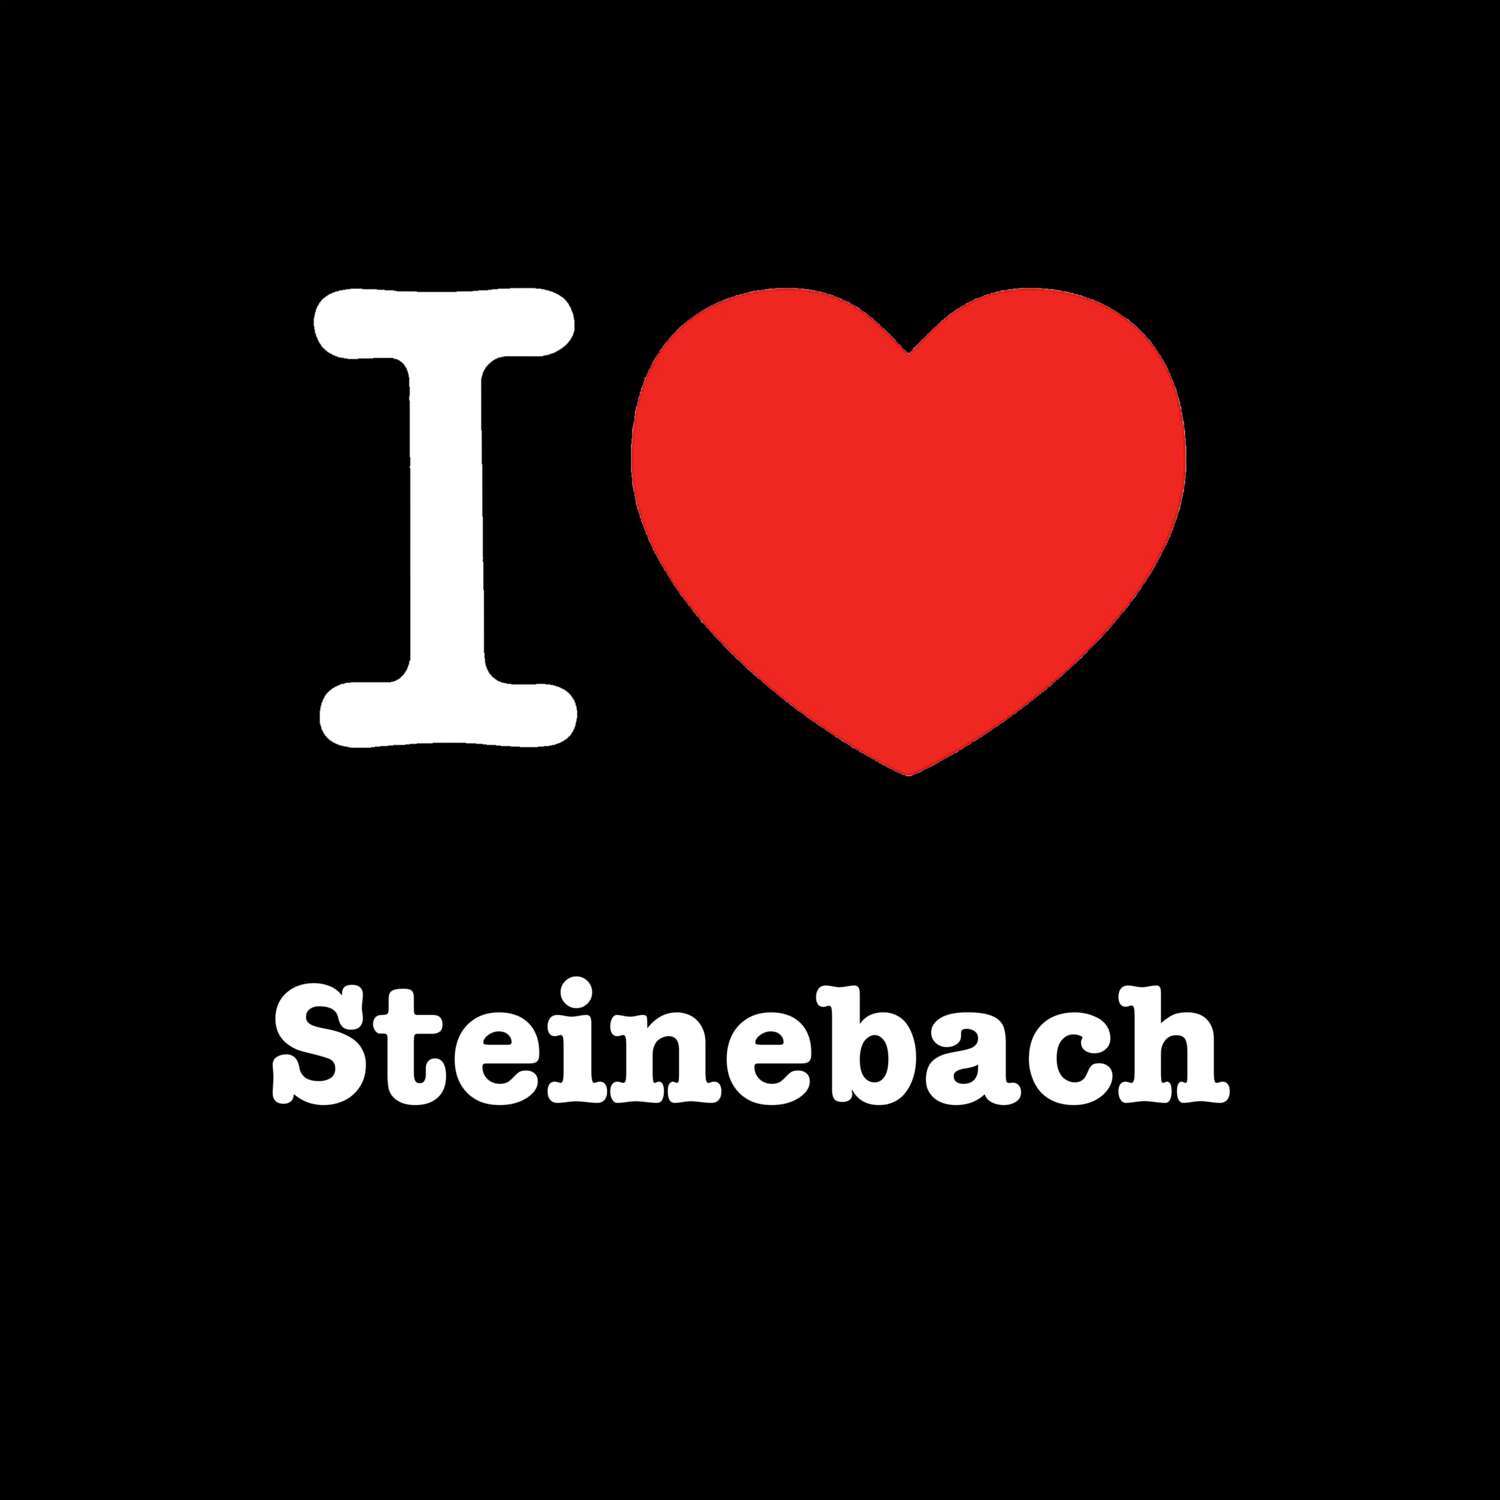 Steinebach T-Shirt »I love«